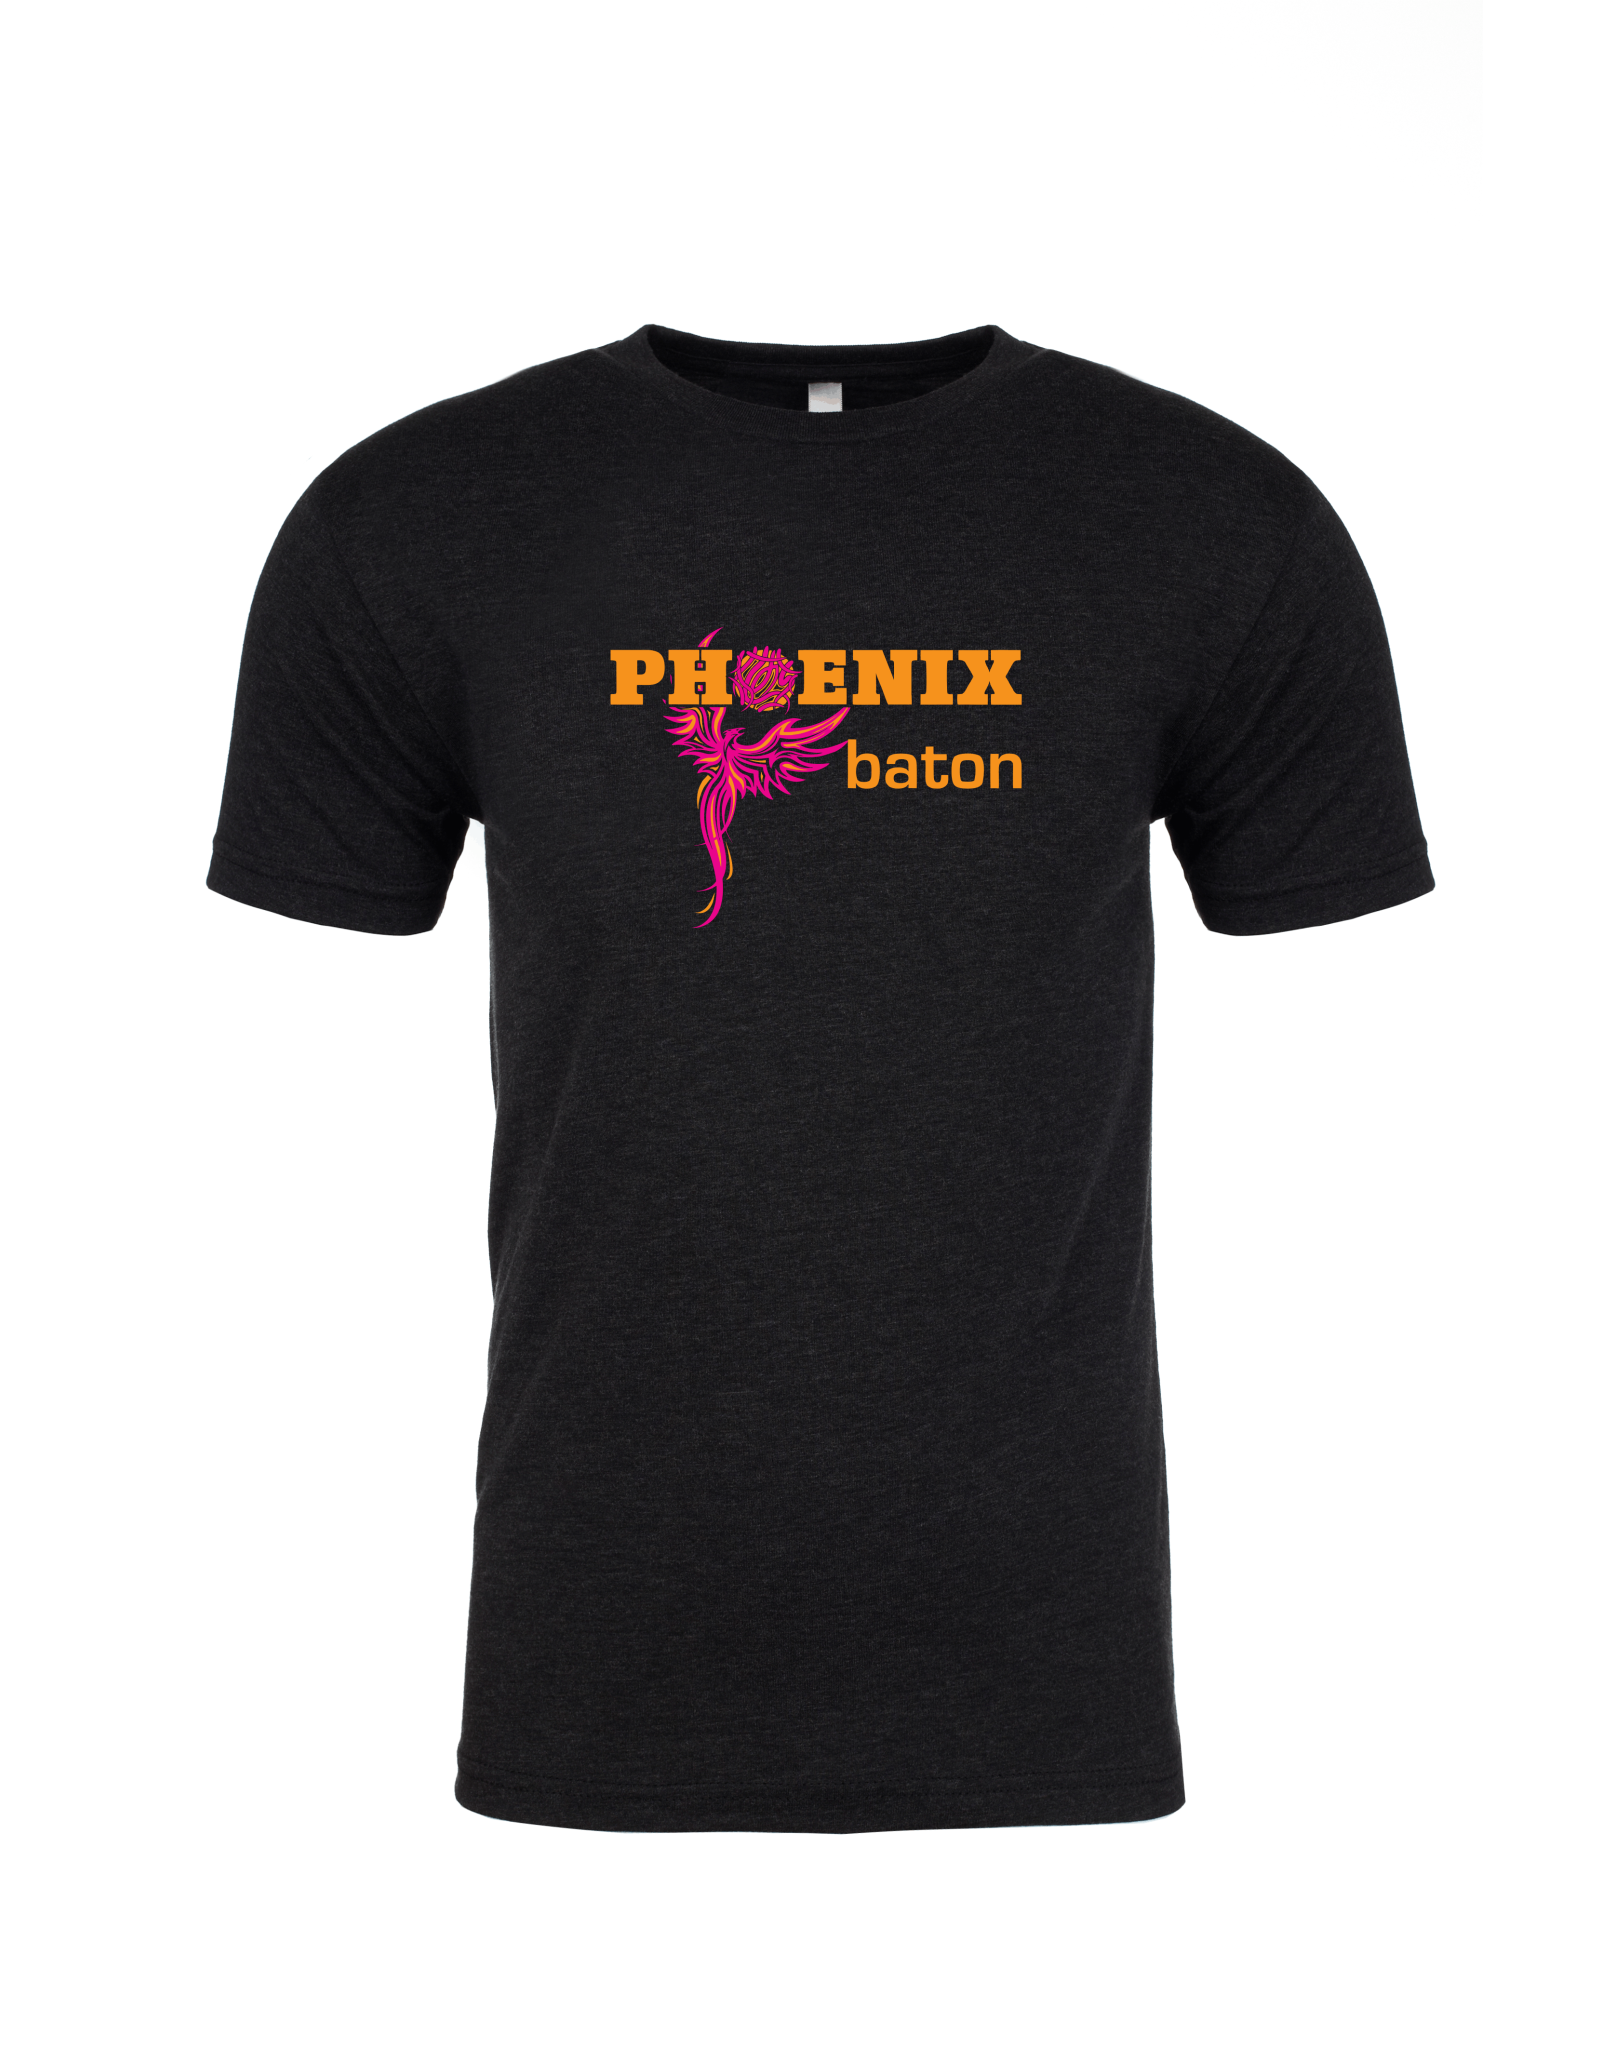 Next Level Apparel Phoenix Tri-Blend T-shirt